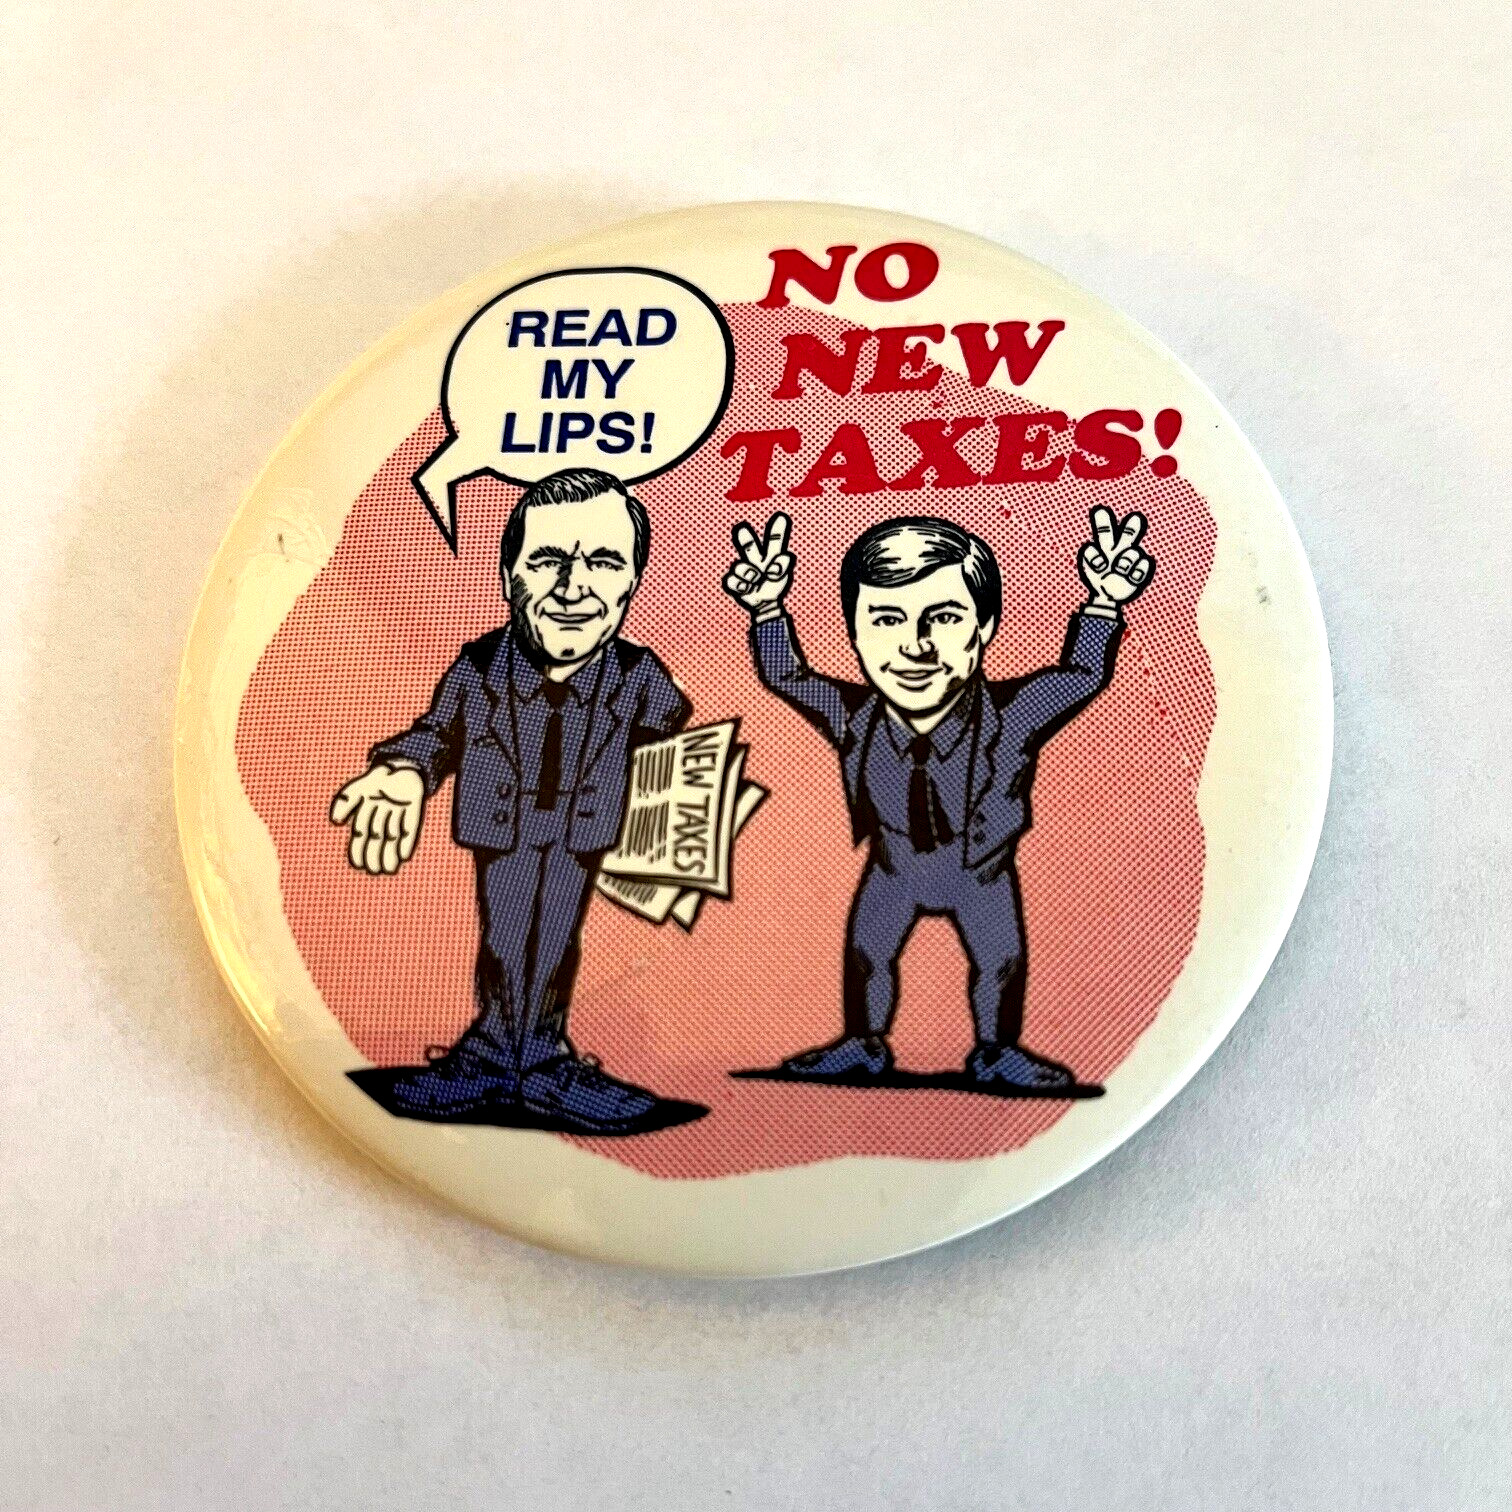  1984 Vintage Button Pin President HW Bush/Quayle Campaign Button Pin Badge 